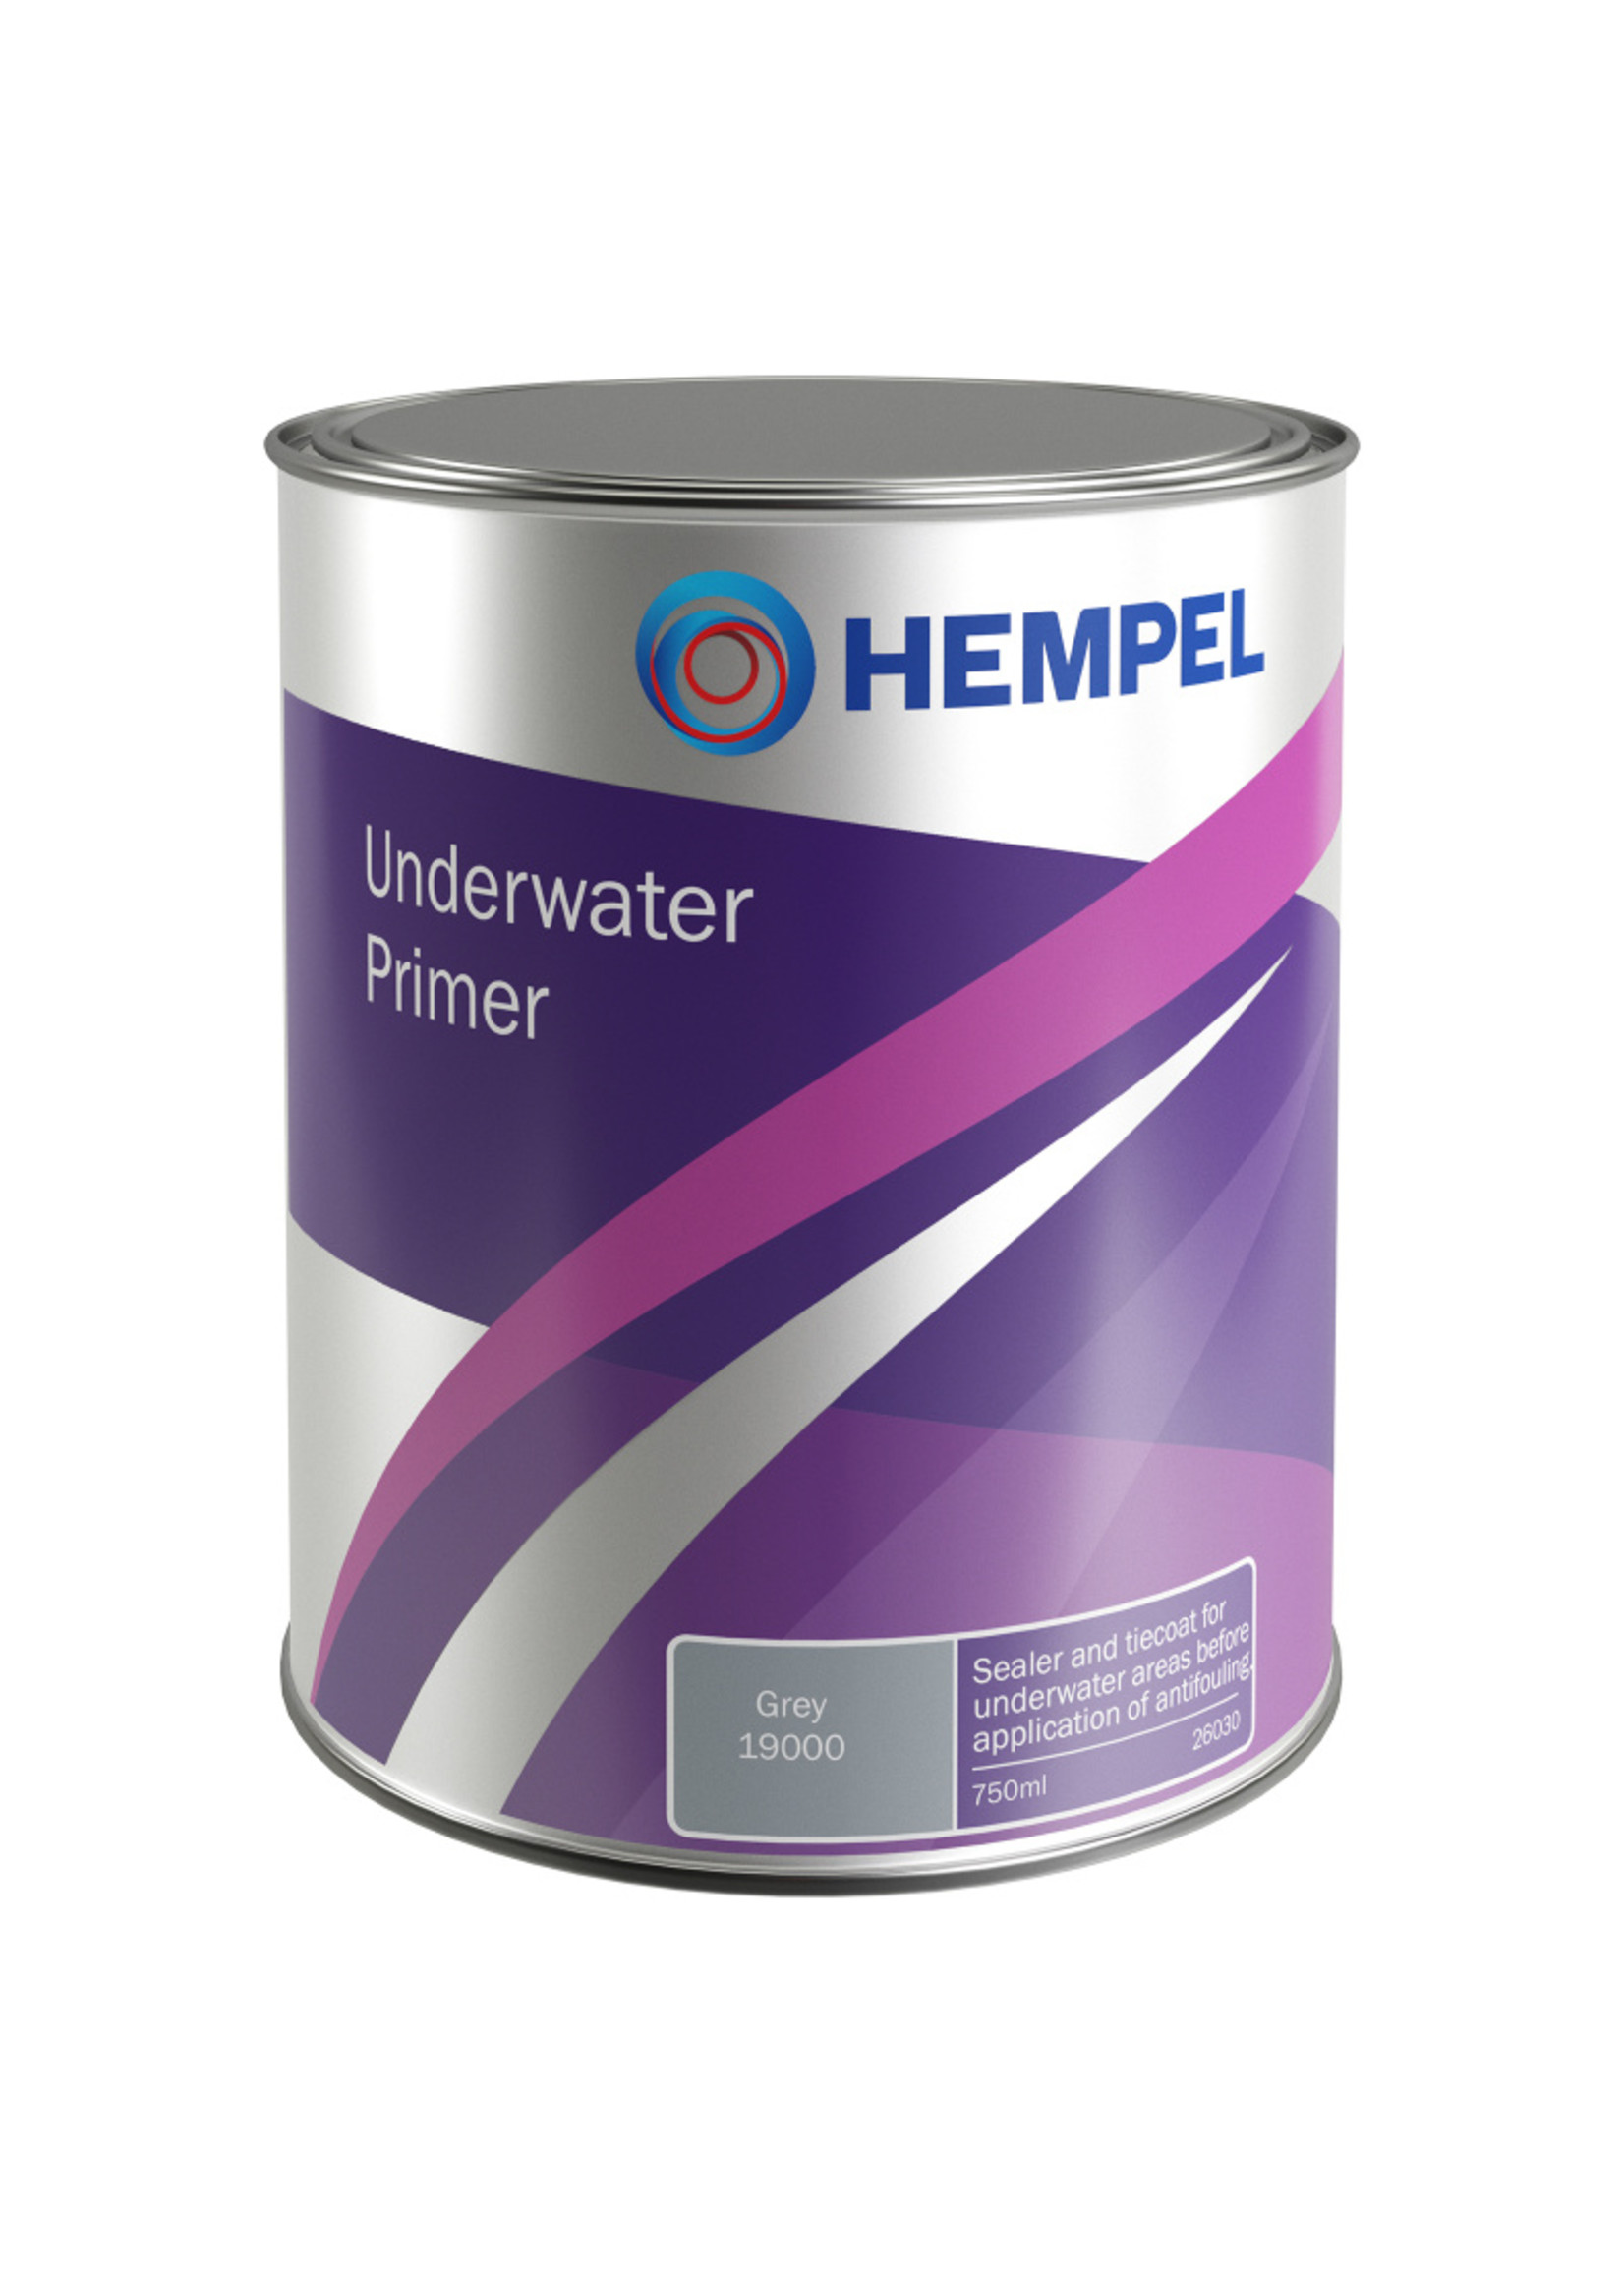 Hempel Underwater Primer 26030 Grey 19000 Blik 2,5 liter